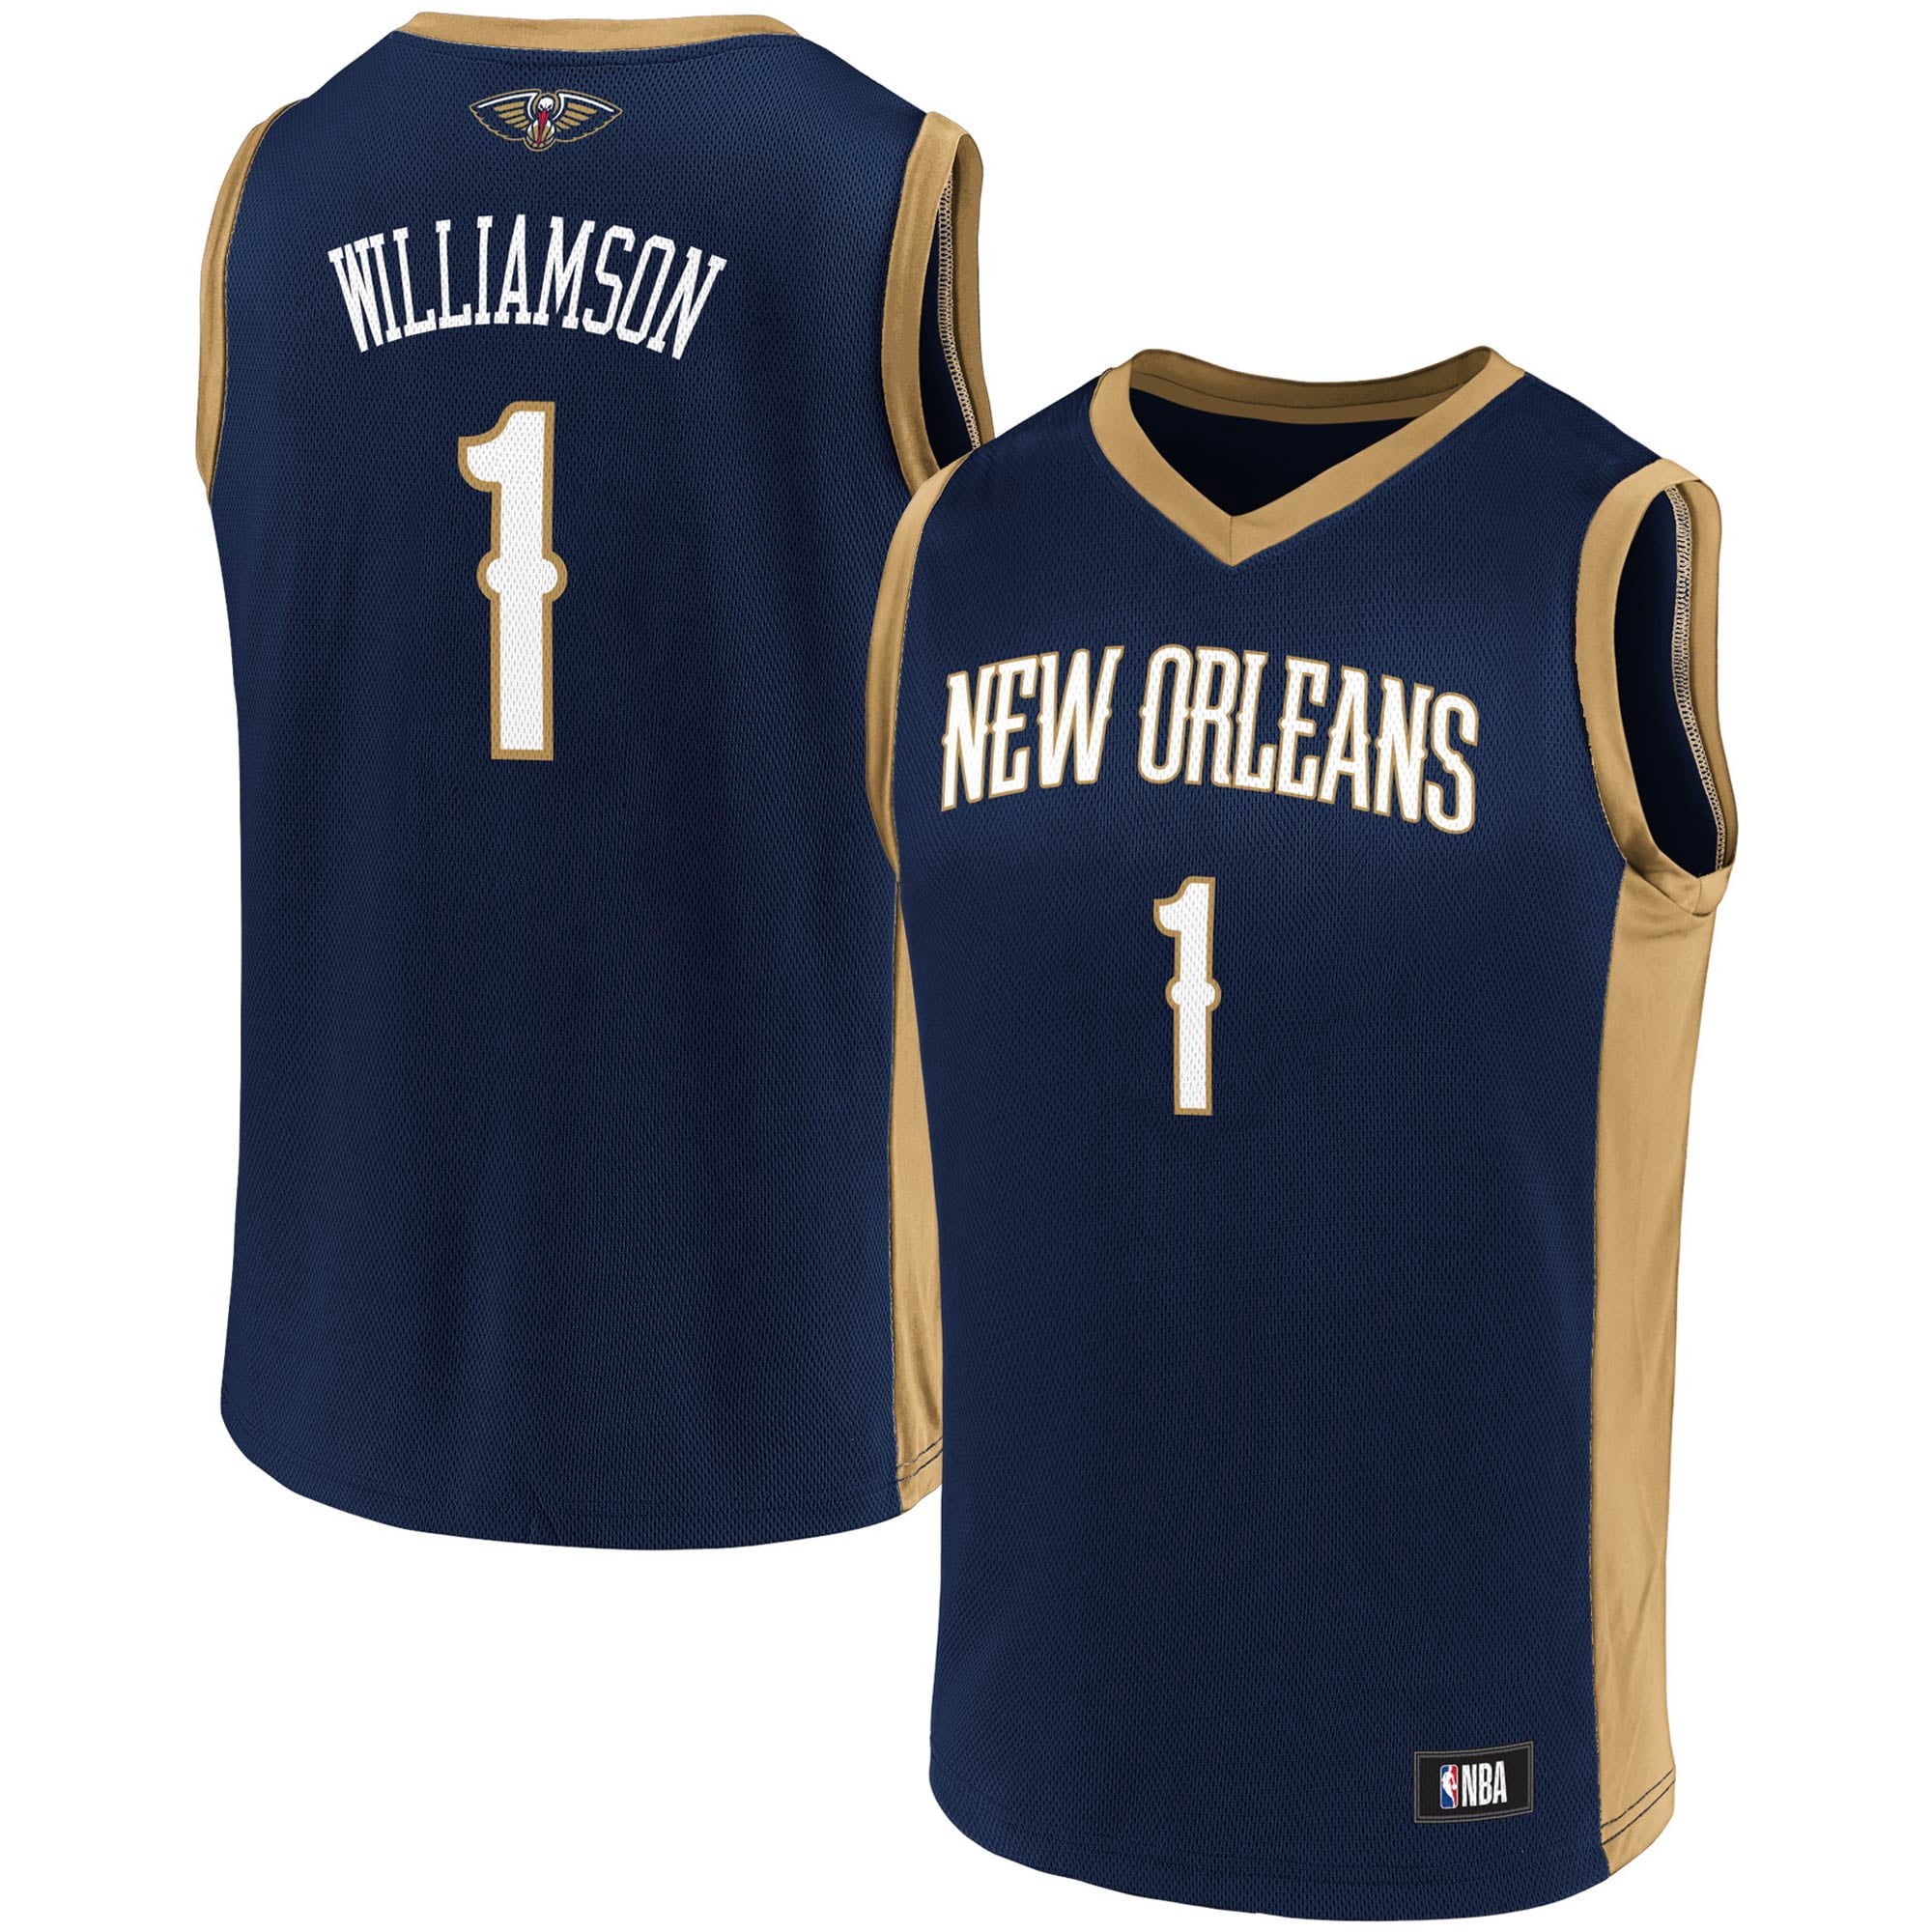 New Orleans Pelicans Apparel & Gear